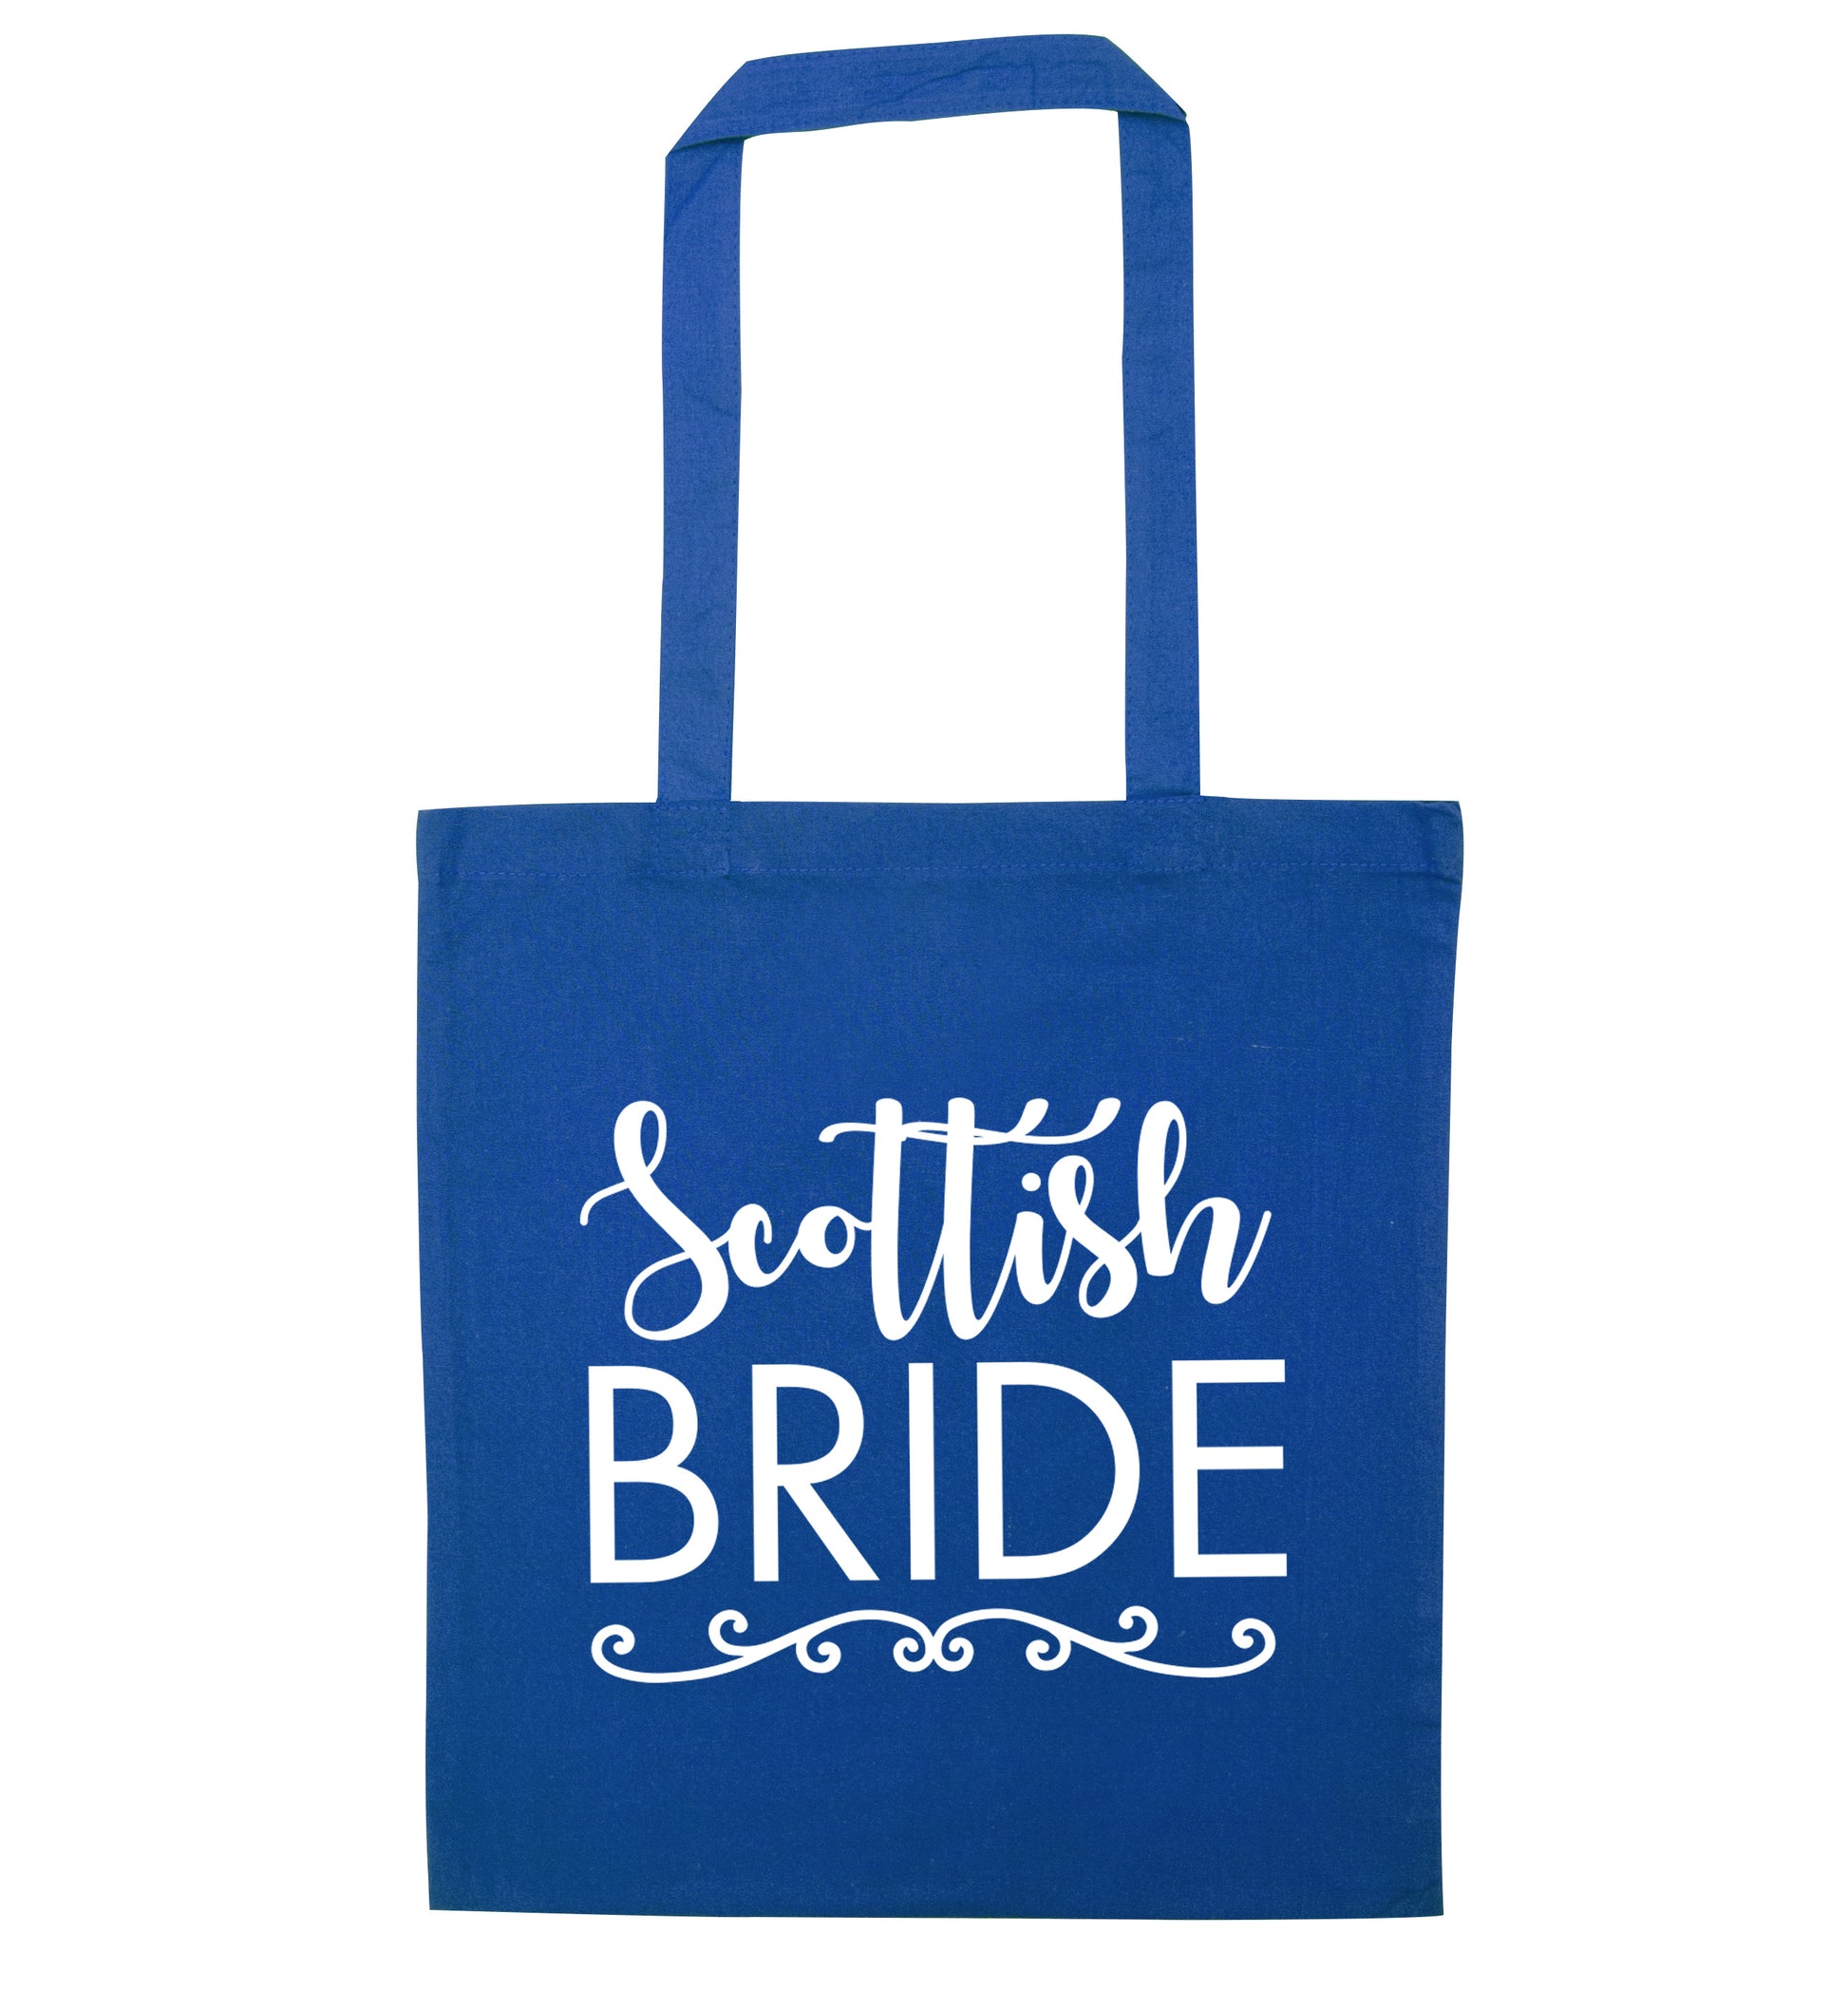 Scottish Bride blue tote bag